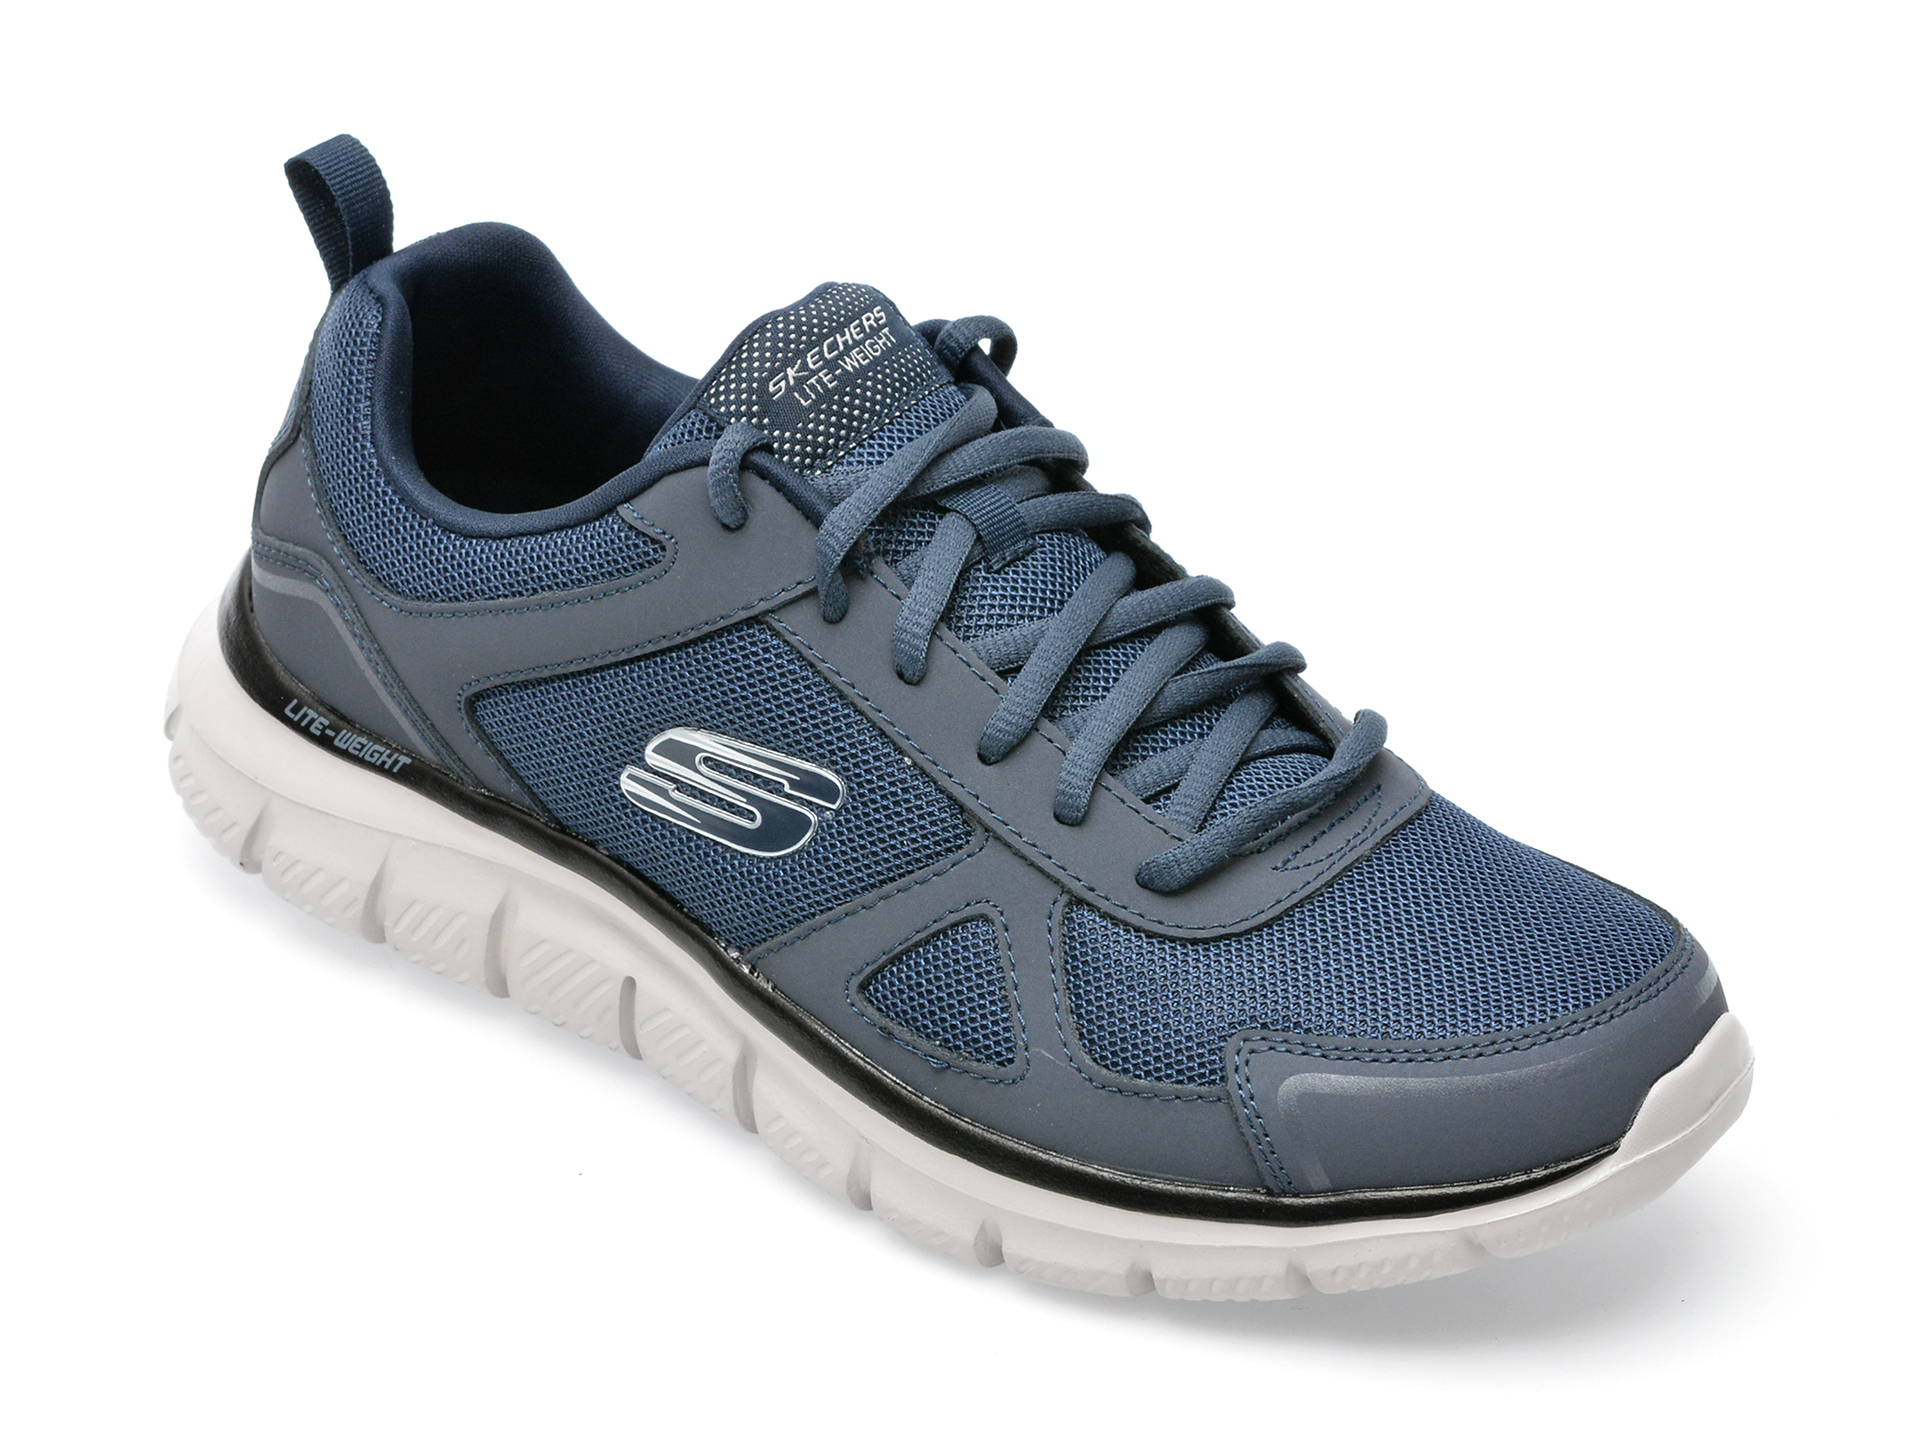 Pantofi sport SKECHERS bleumarin, TRACK, din material textil si piele naturala